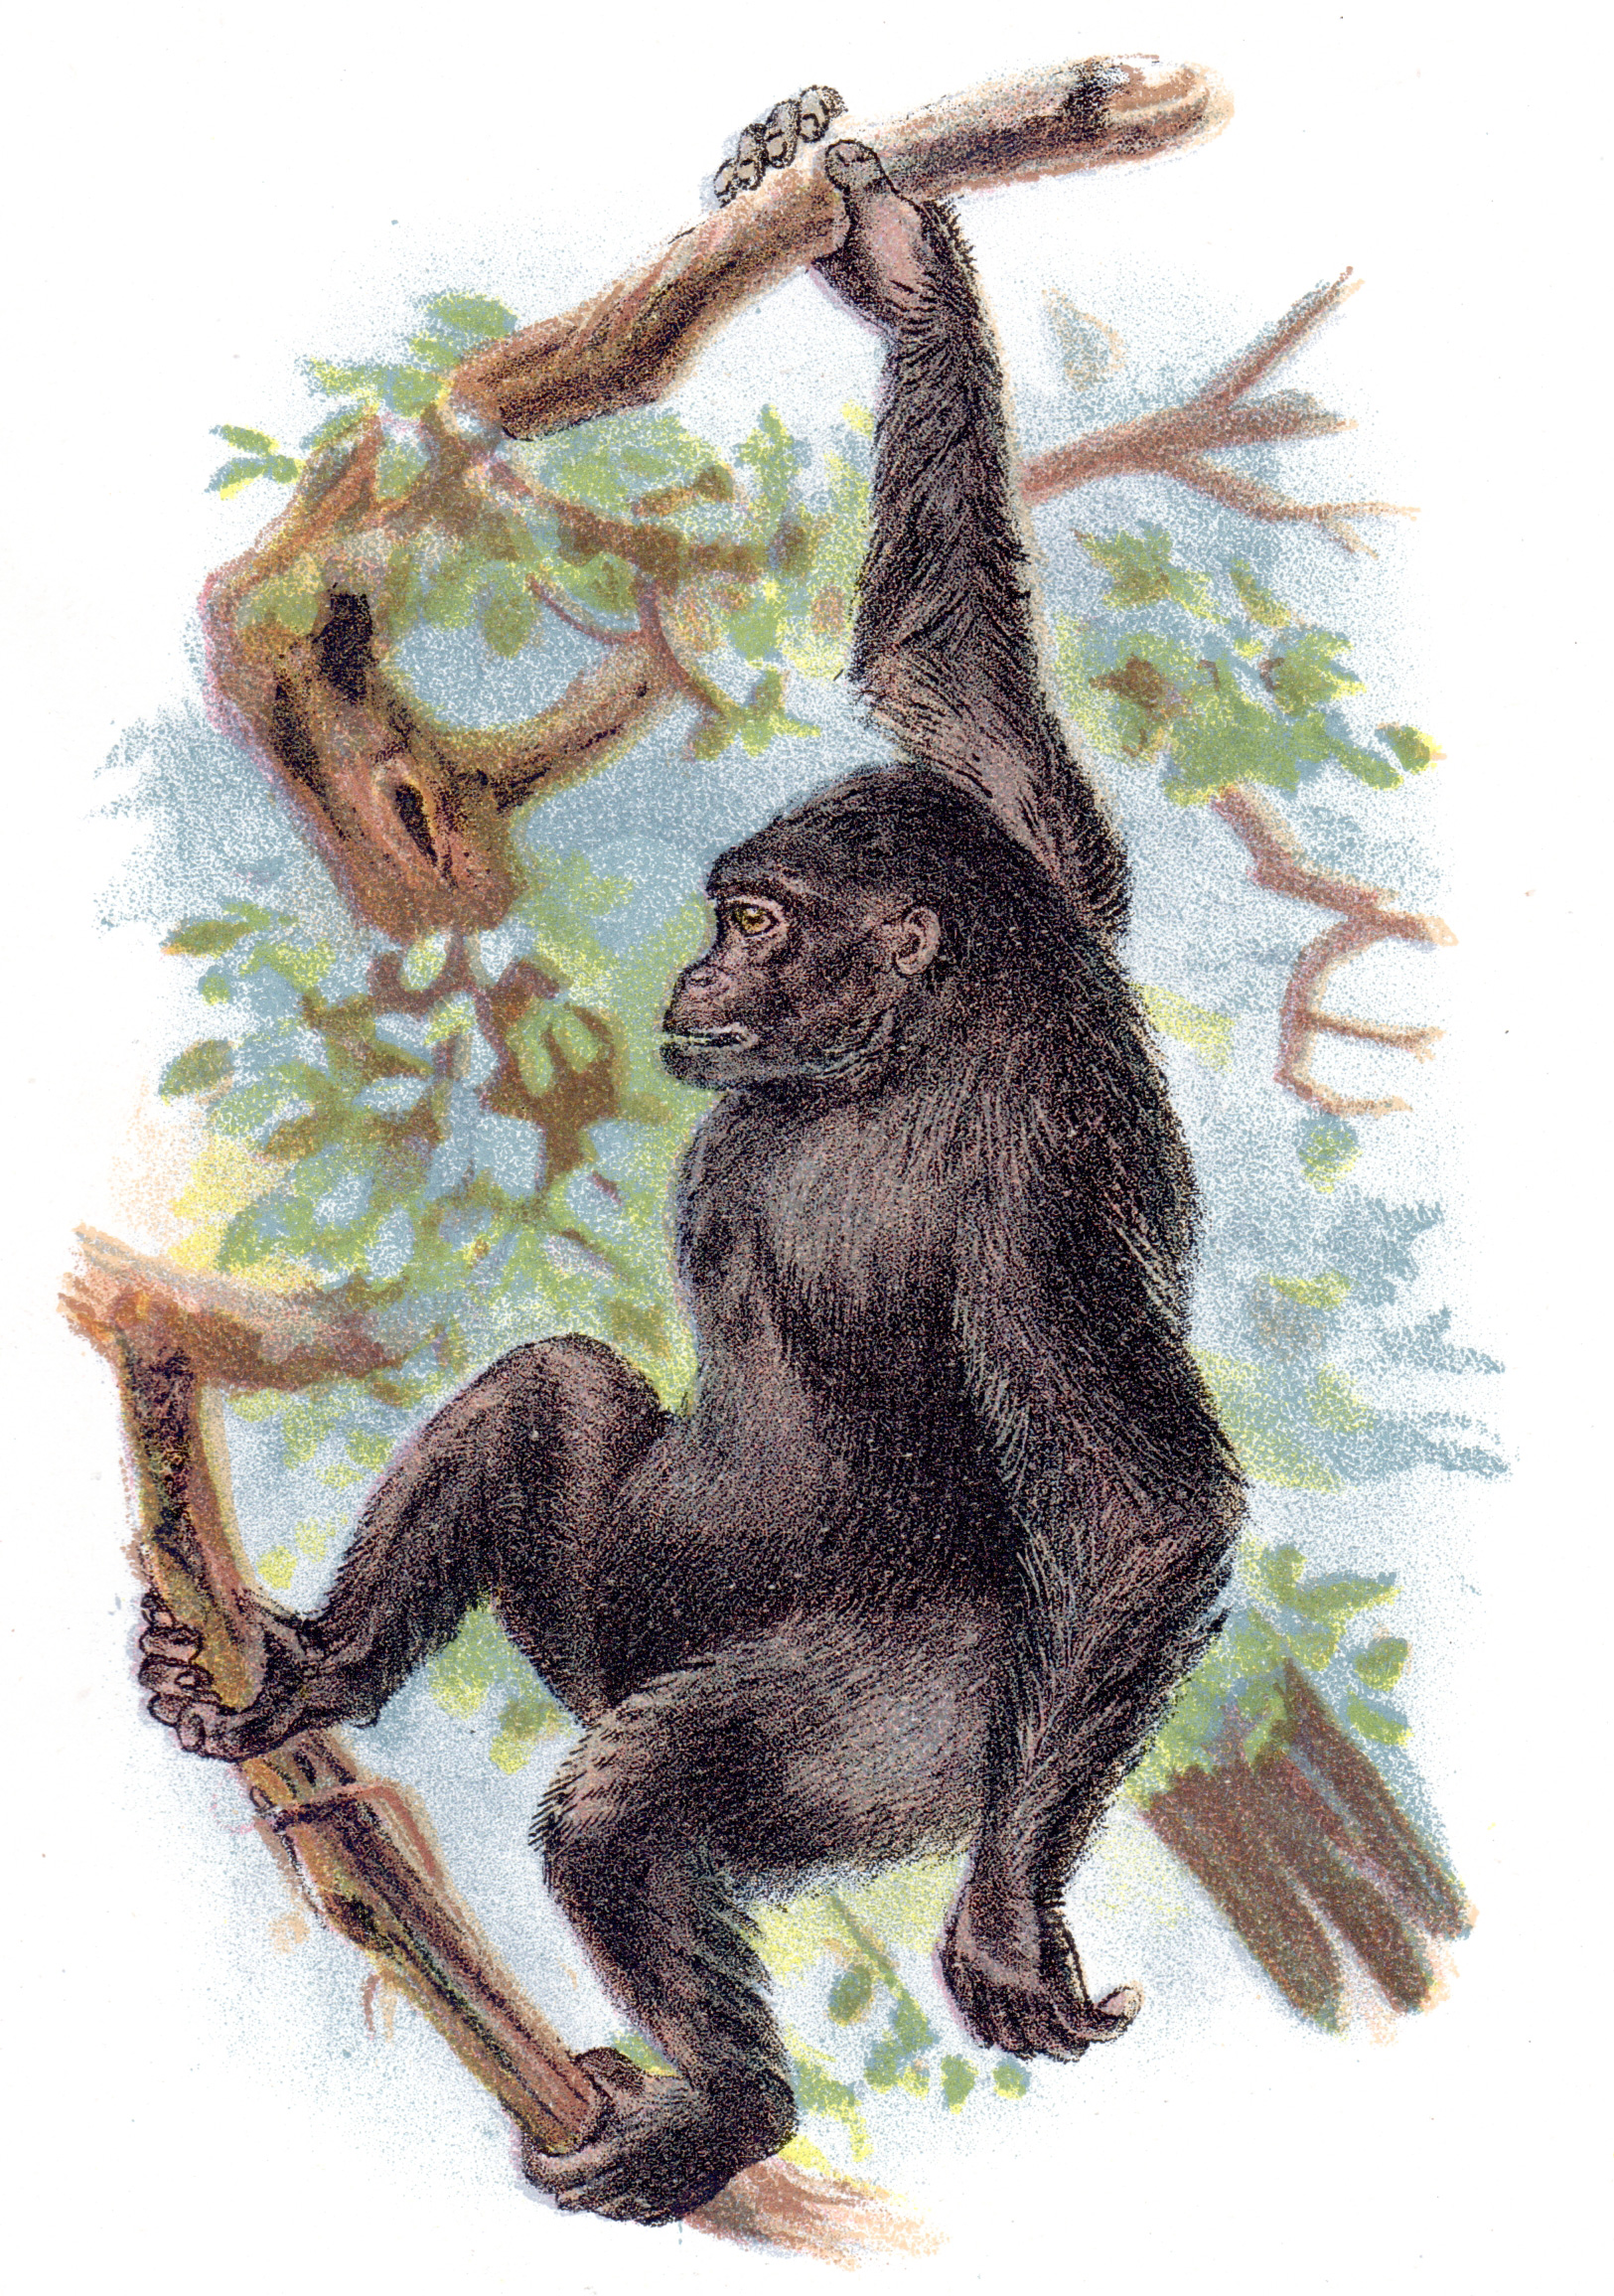 Wyman & Sons / Lloyd's Natural History – Monkeys, Apes, Primates